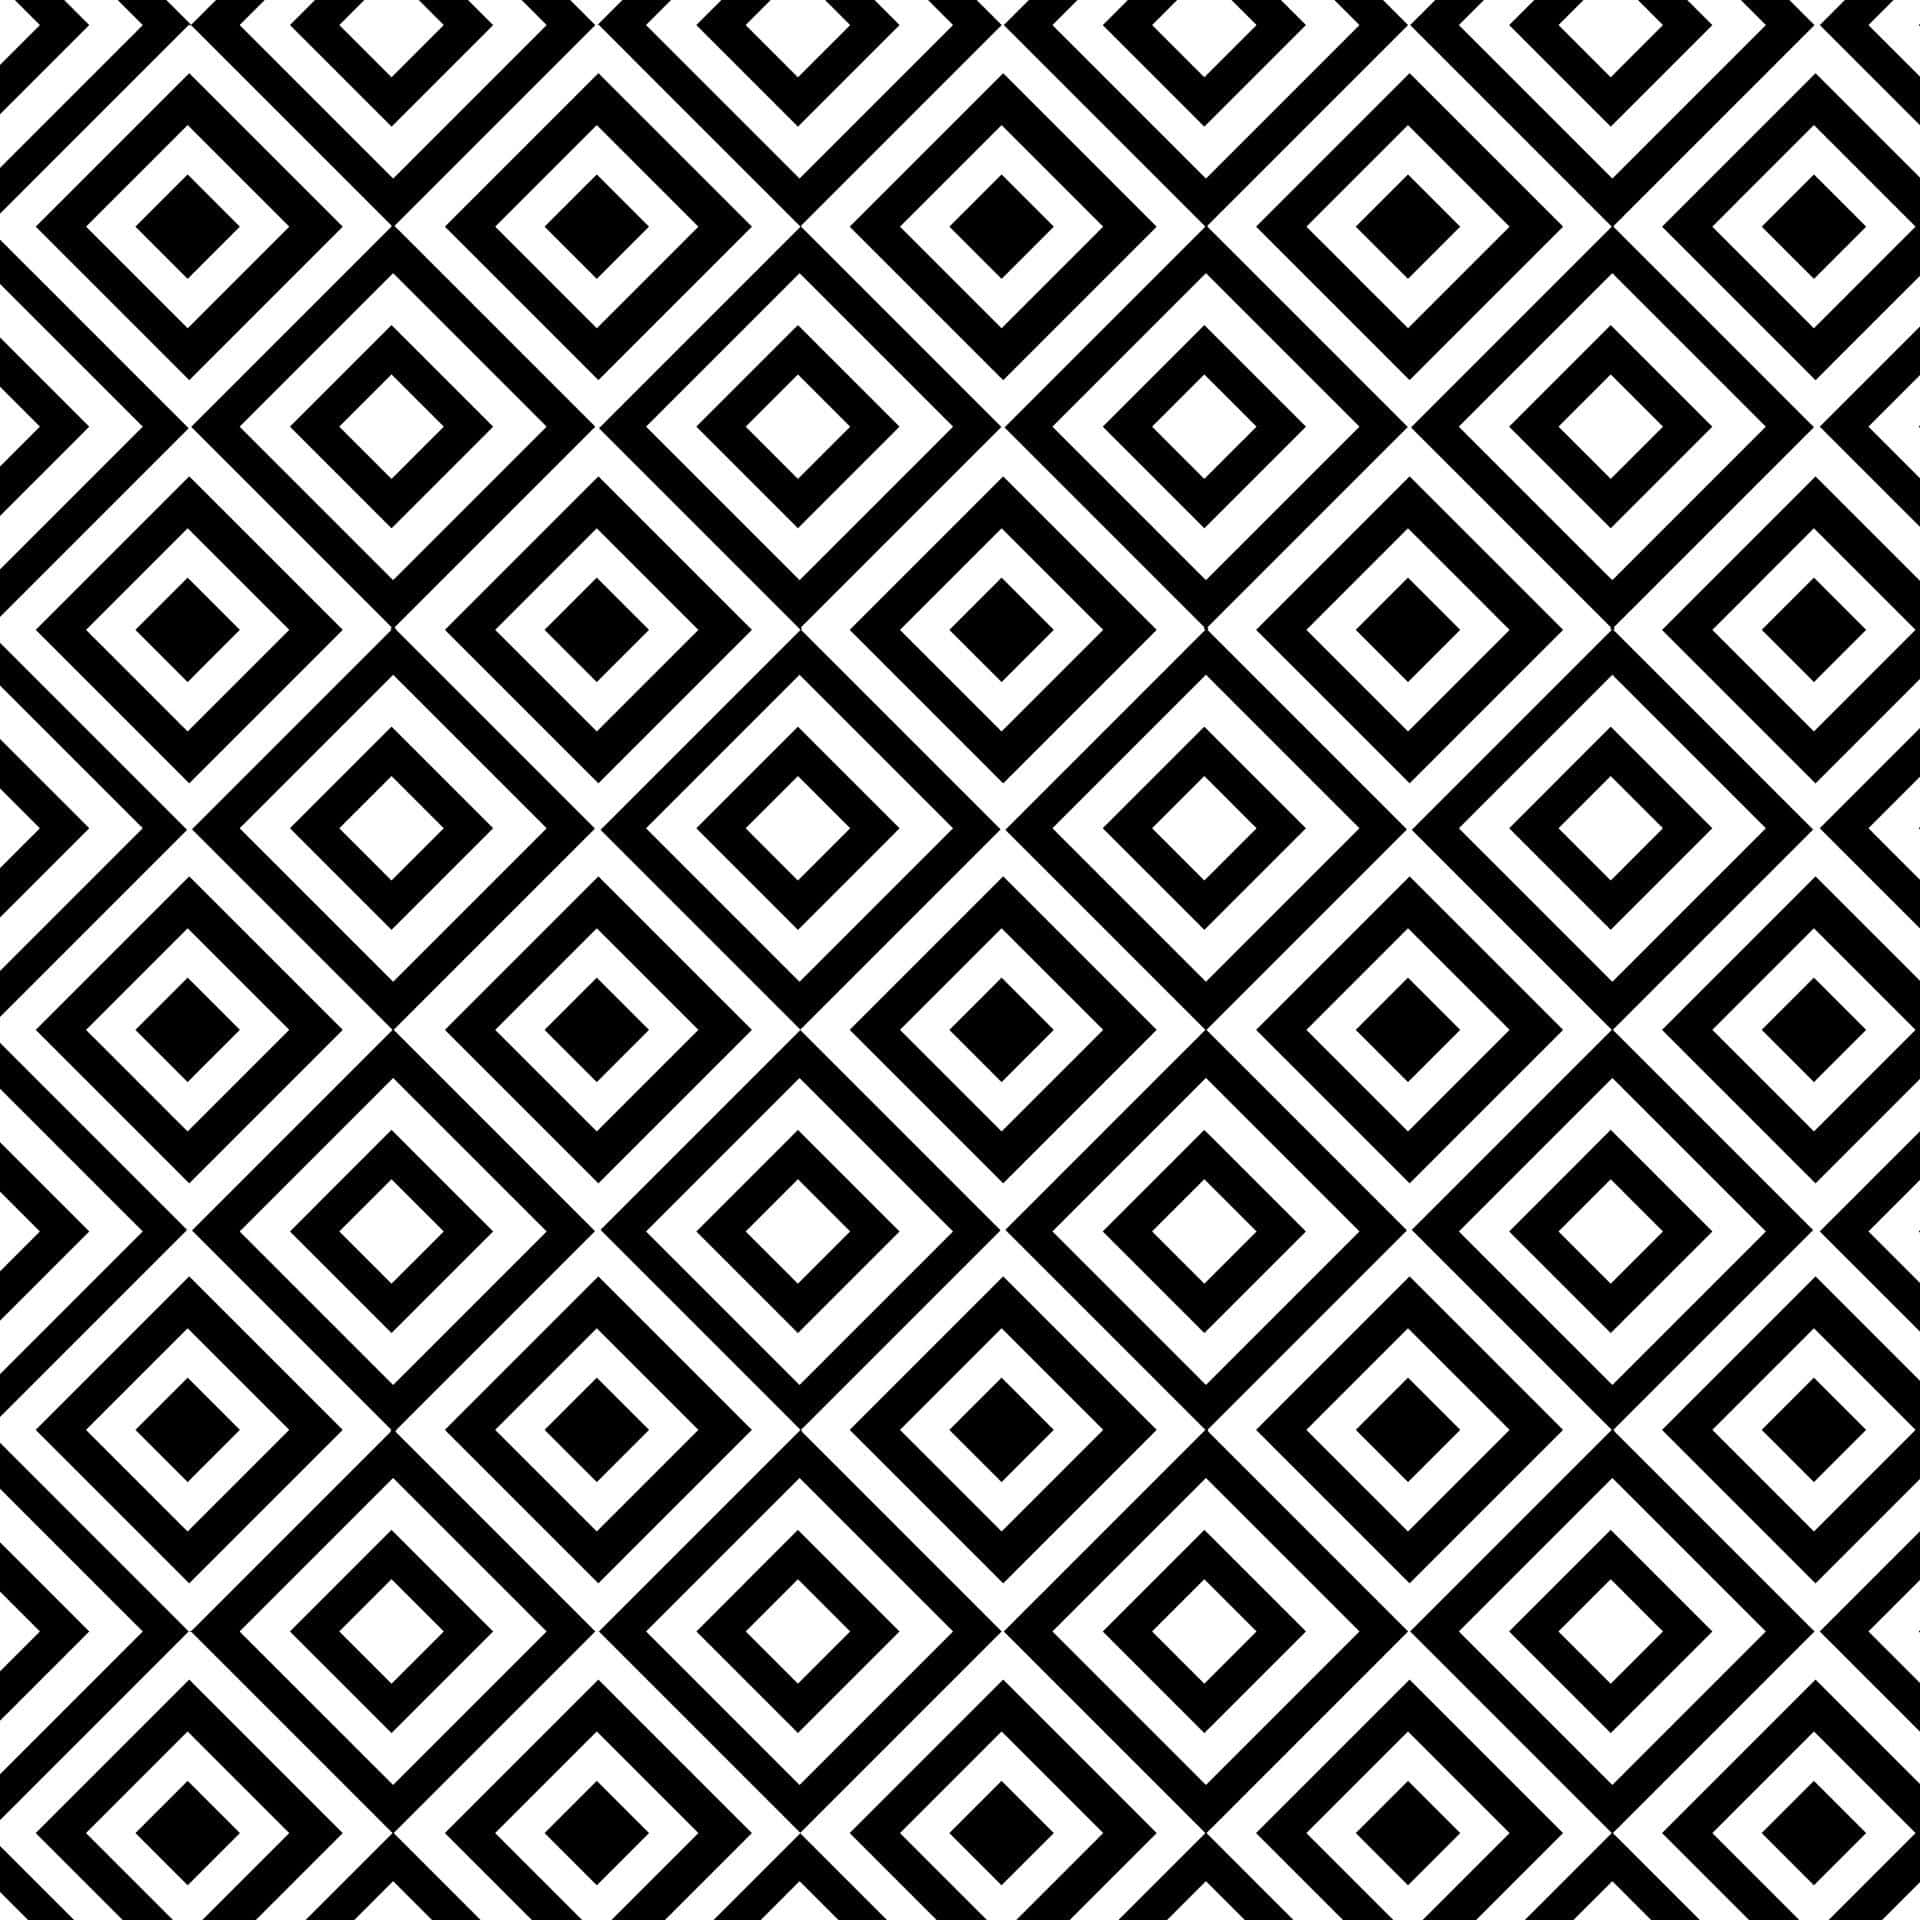 Mesmerizing Black and White Geometric Pattern Wallpaper